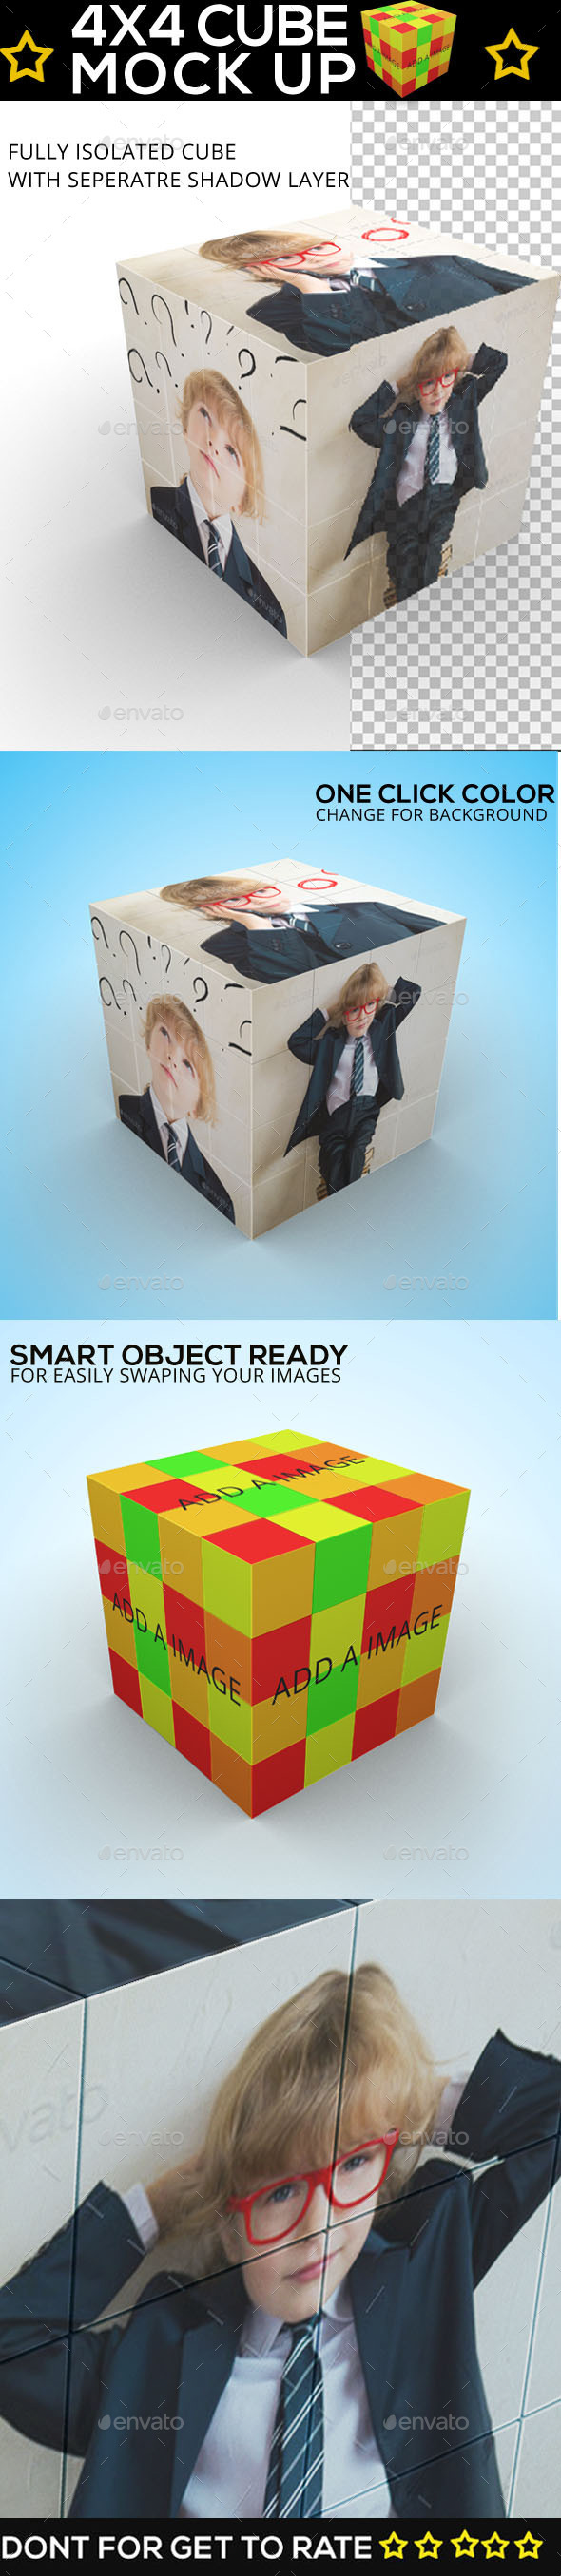 rubiks cube mock up photo realistic displayer display 4x4.jpg